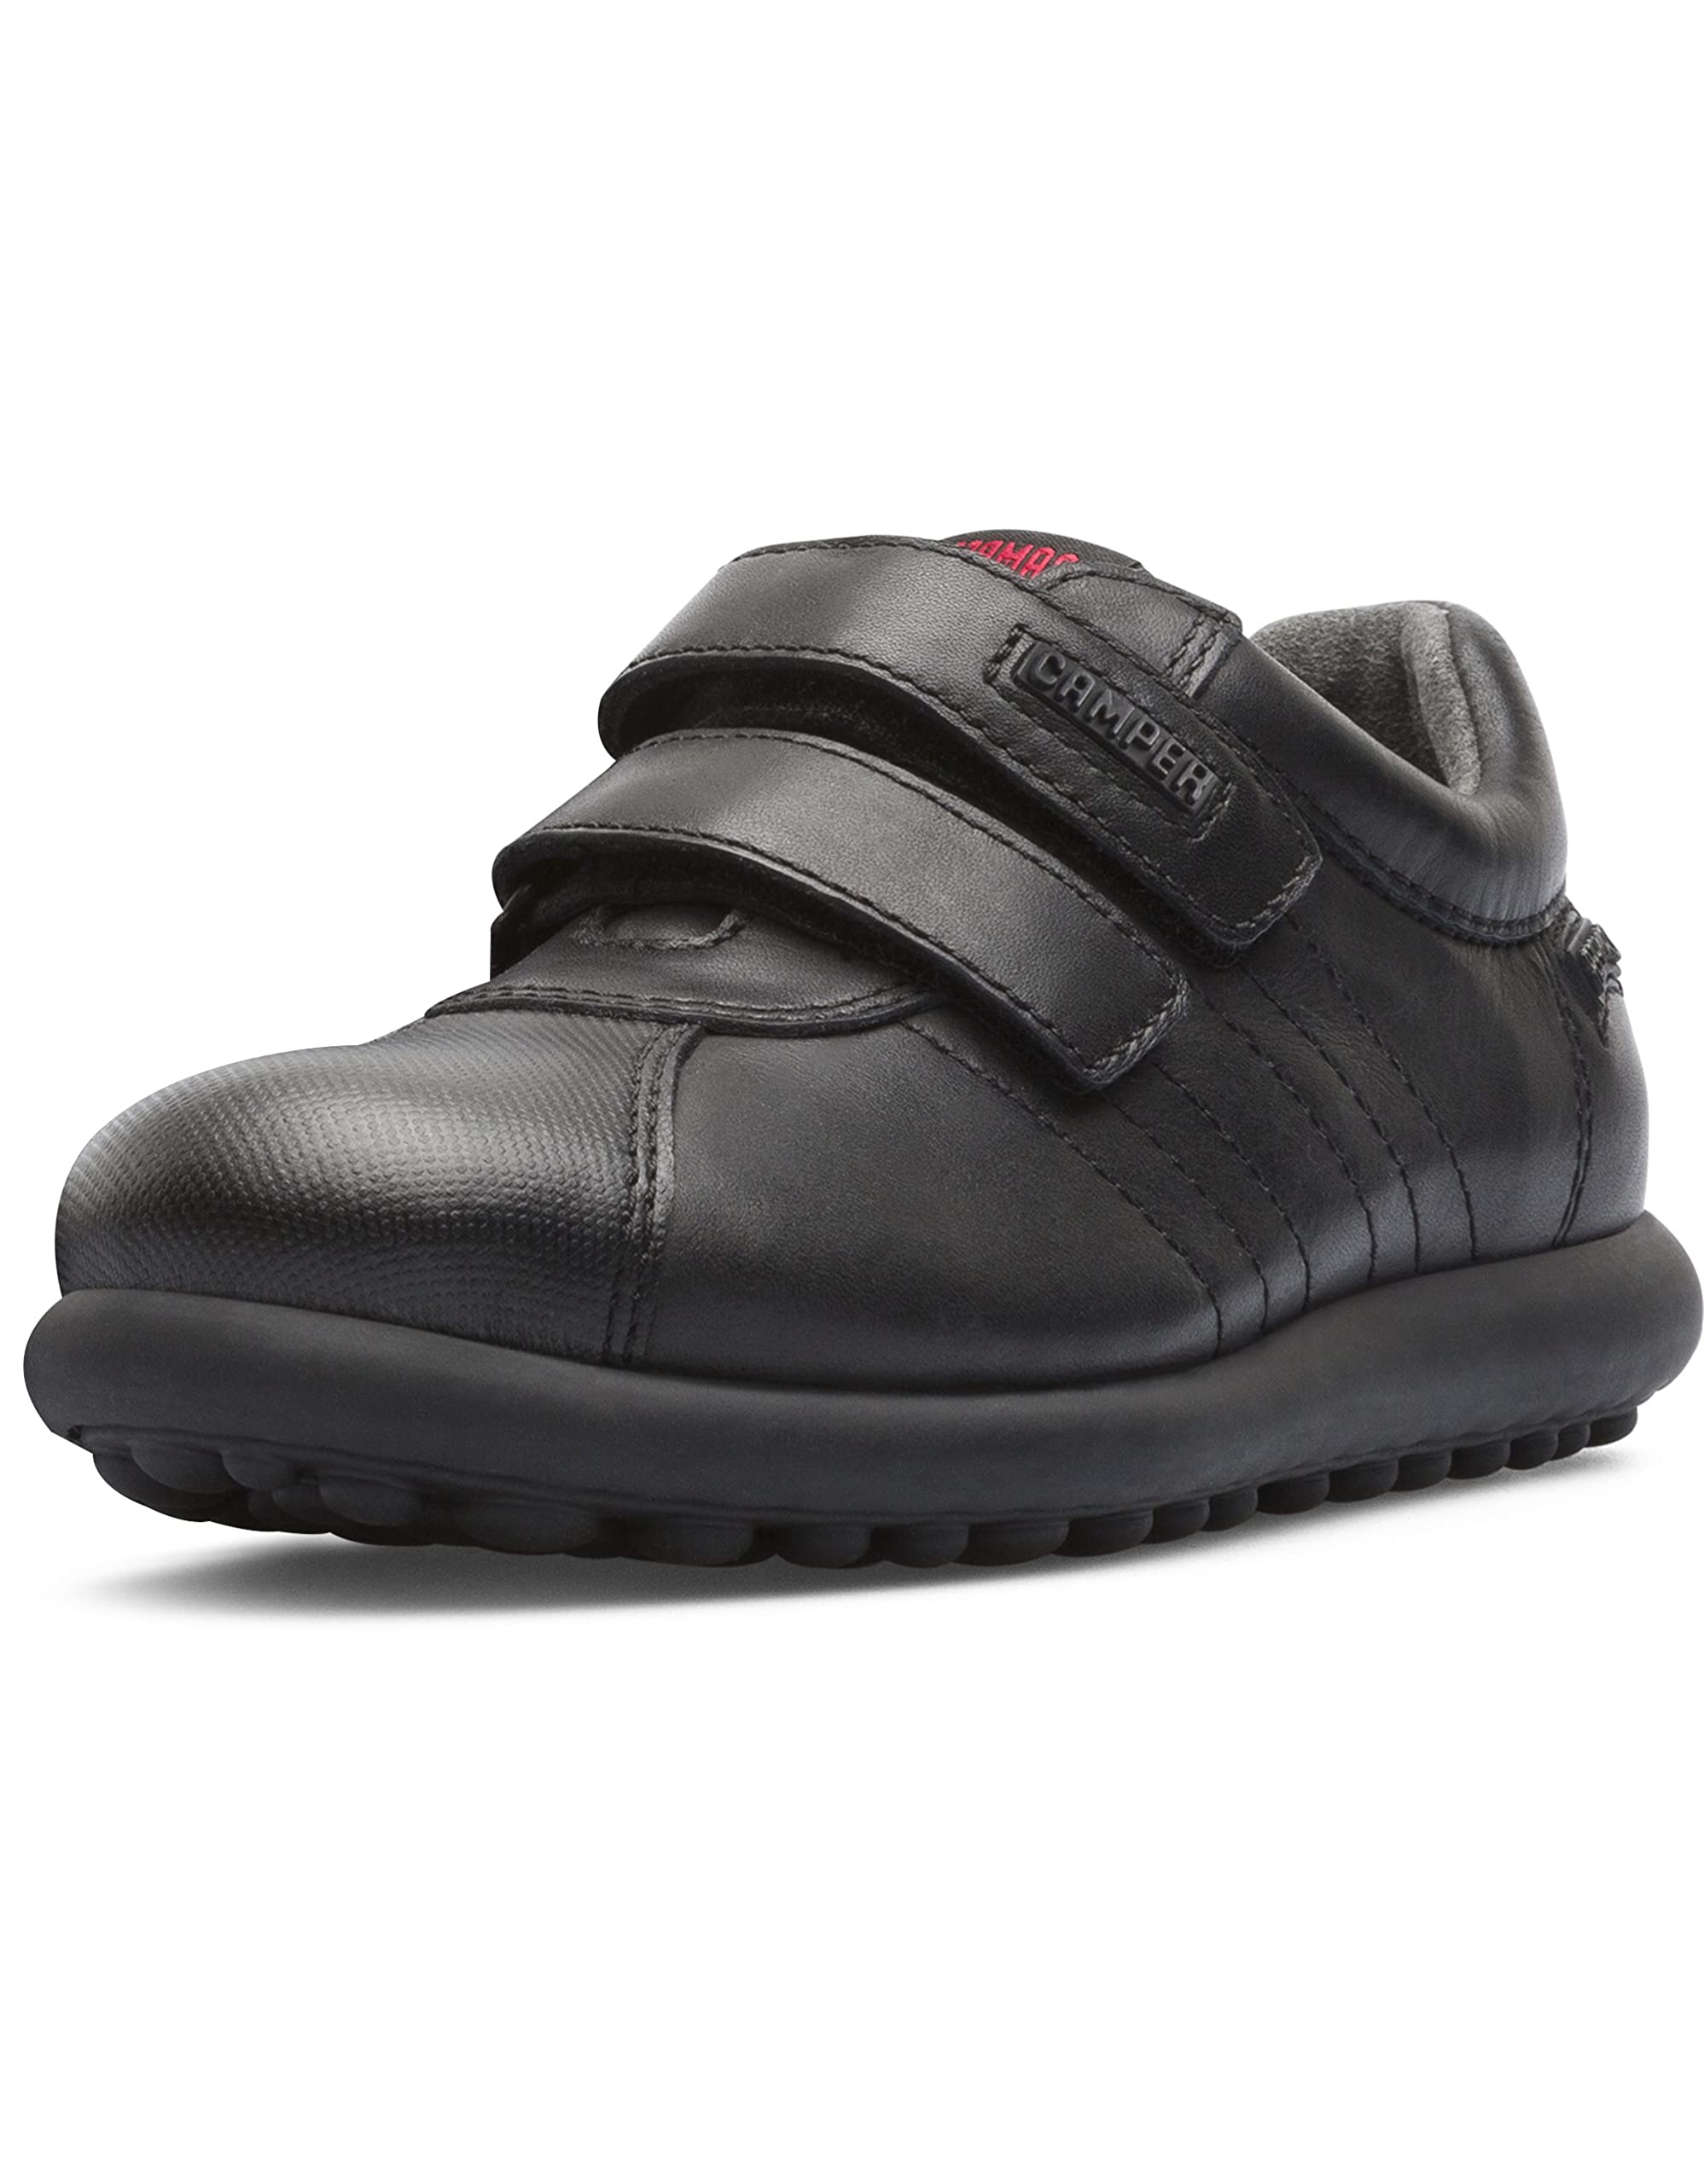 CAMPER, Pelotas Ariel, Unisex-Kinder Sneakers, Schwarz (Black), 29 EU